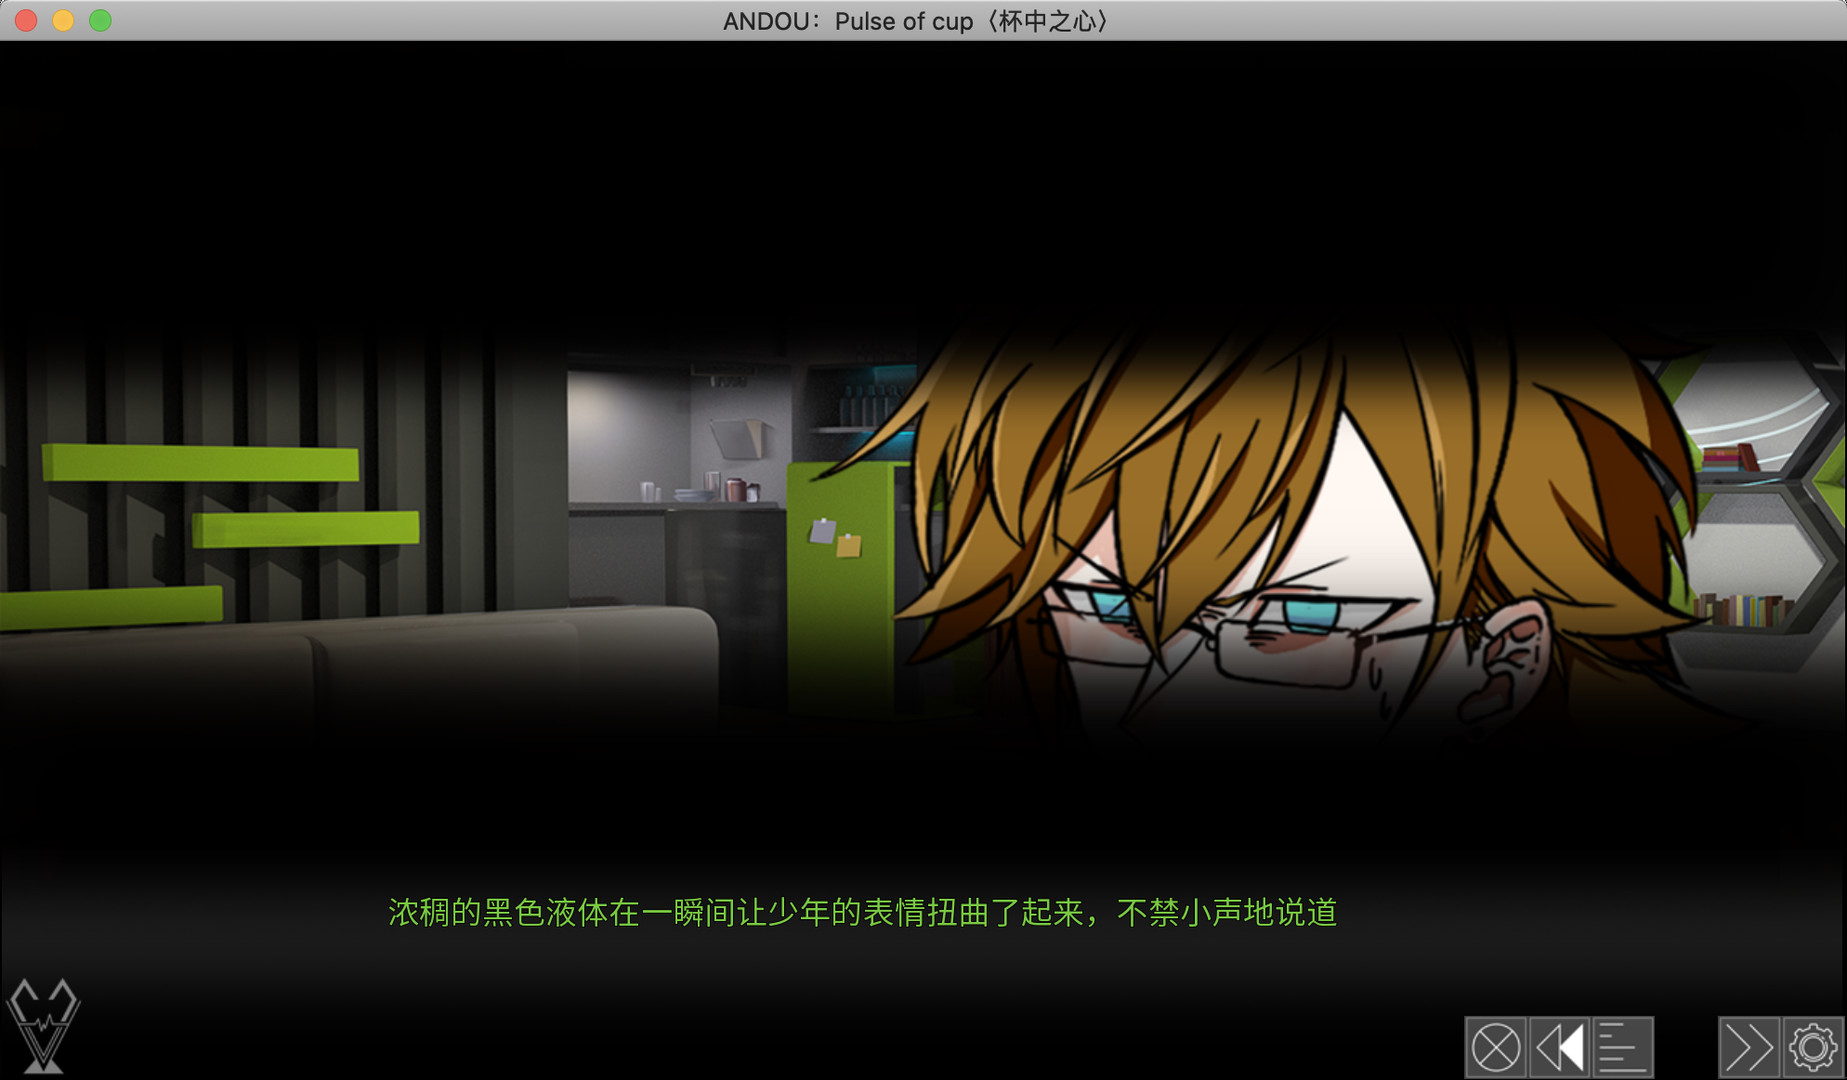 screenshot of 安堂的心理咨询室：杯中之心〈ANDOU：Pulse of cup〉 8